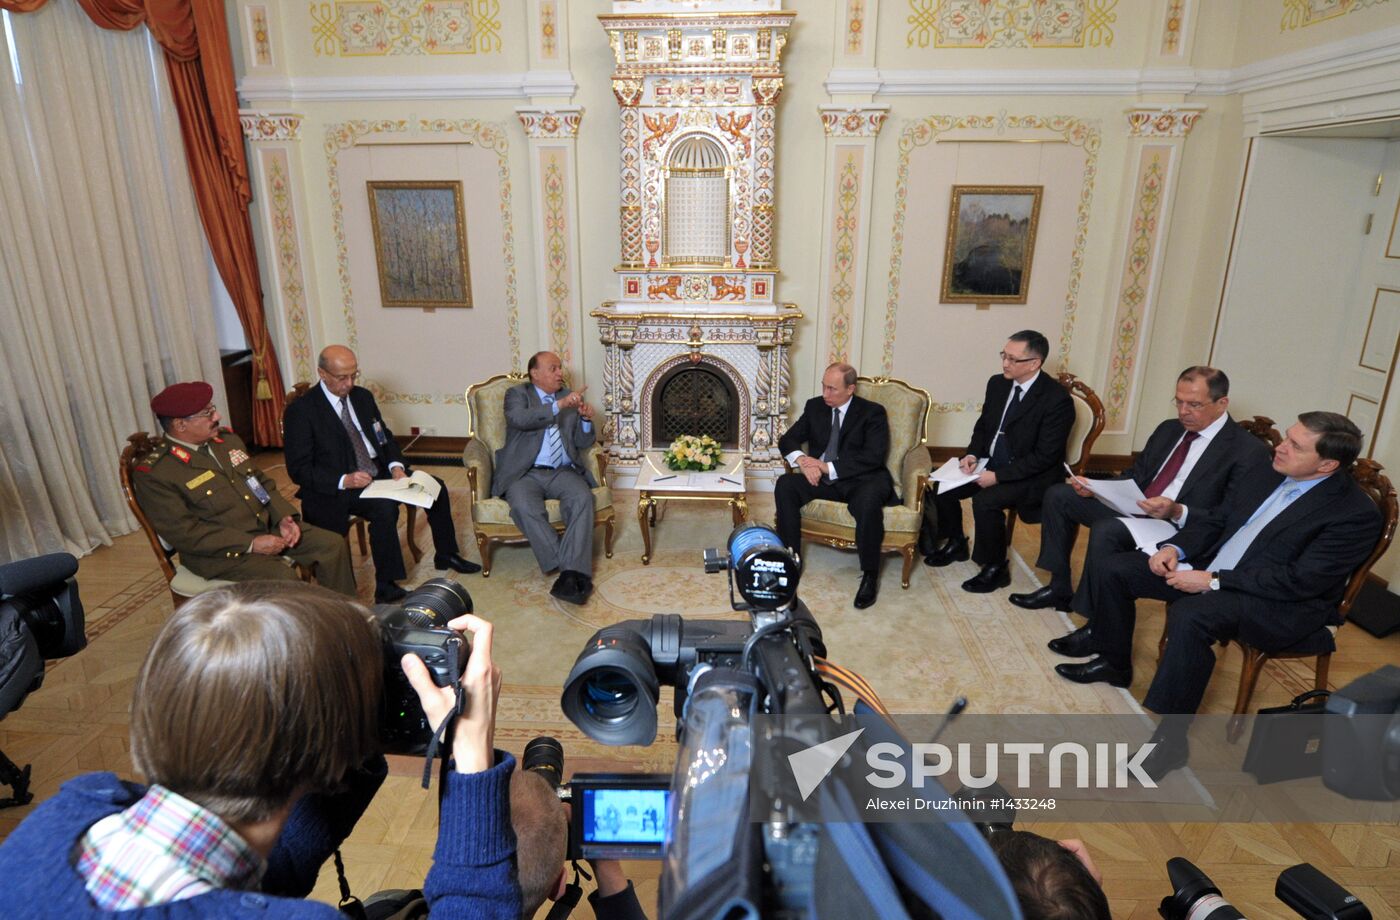 Putin meets with Yemen's President Abd Rabbuh Mansur Hadi